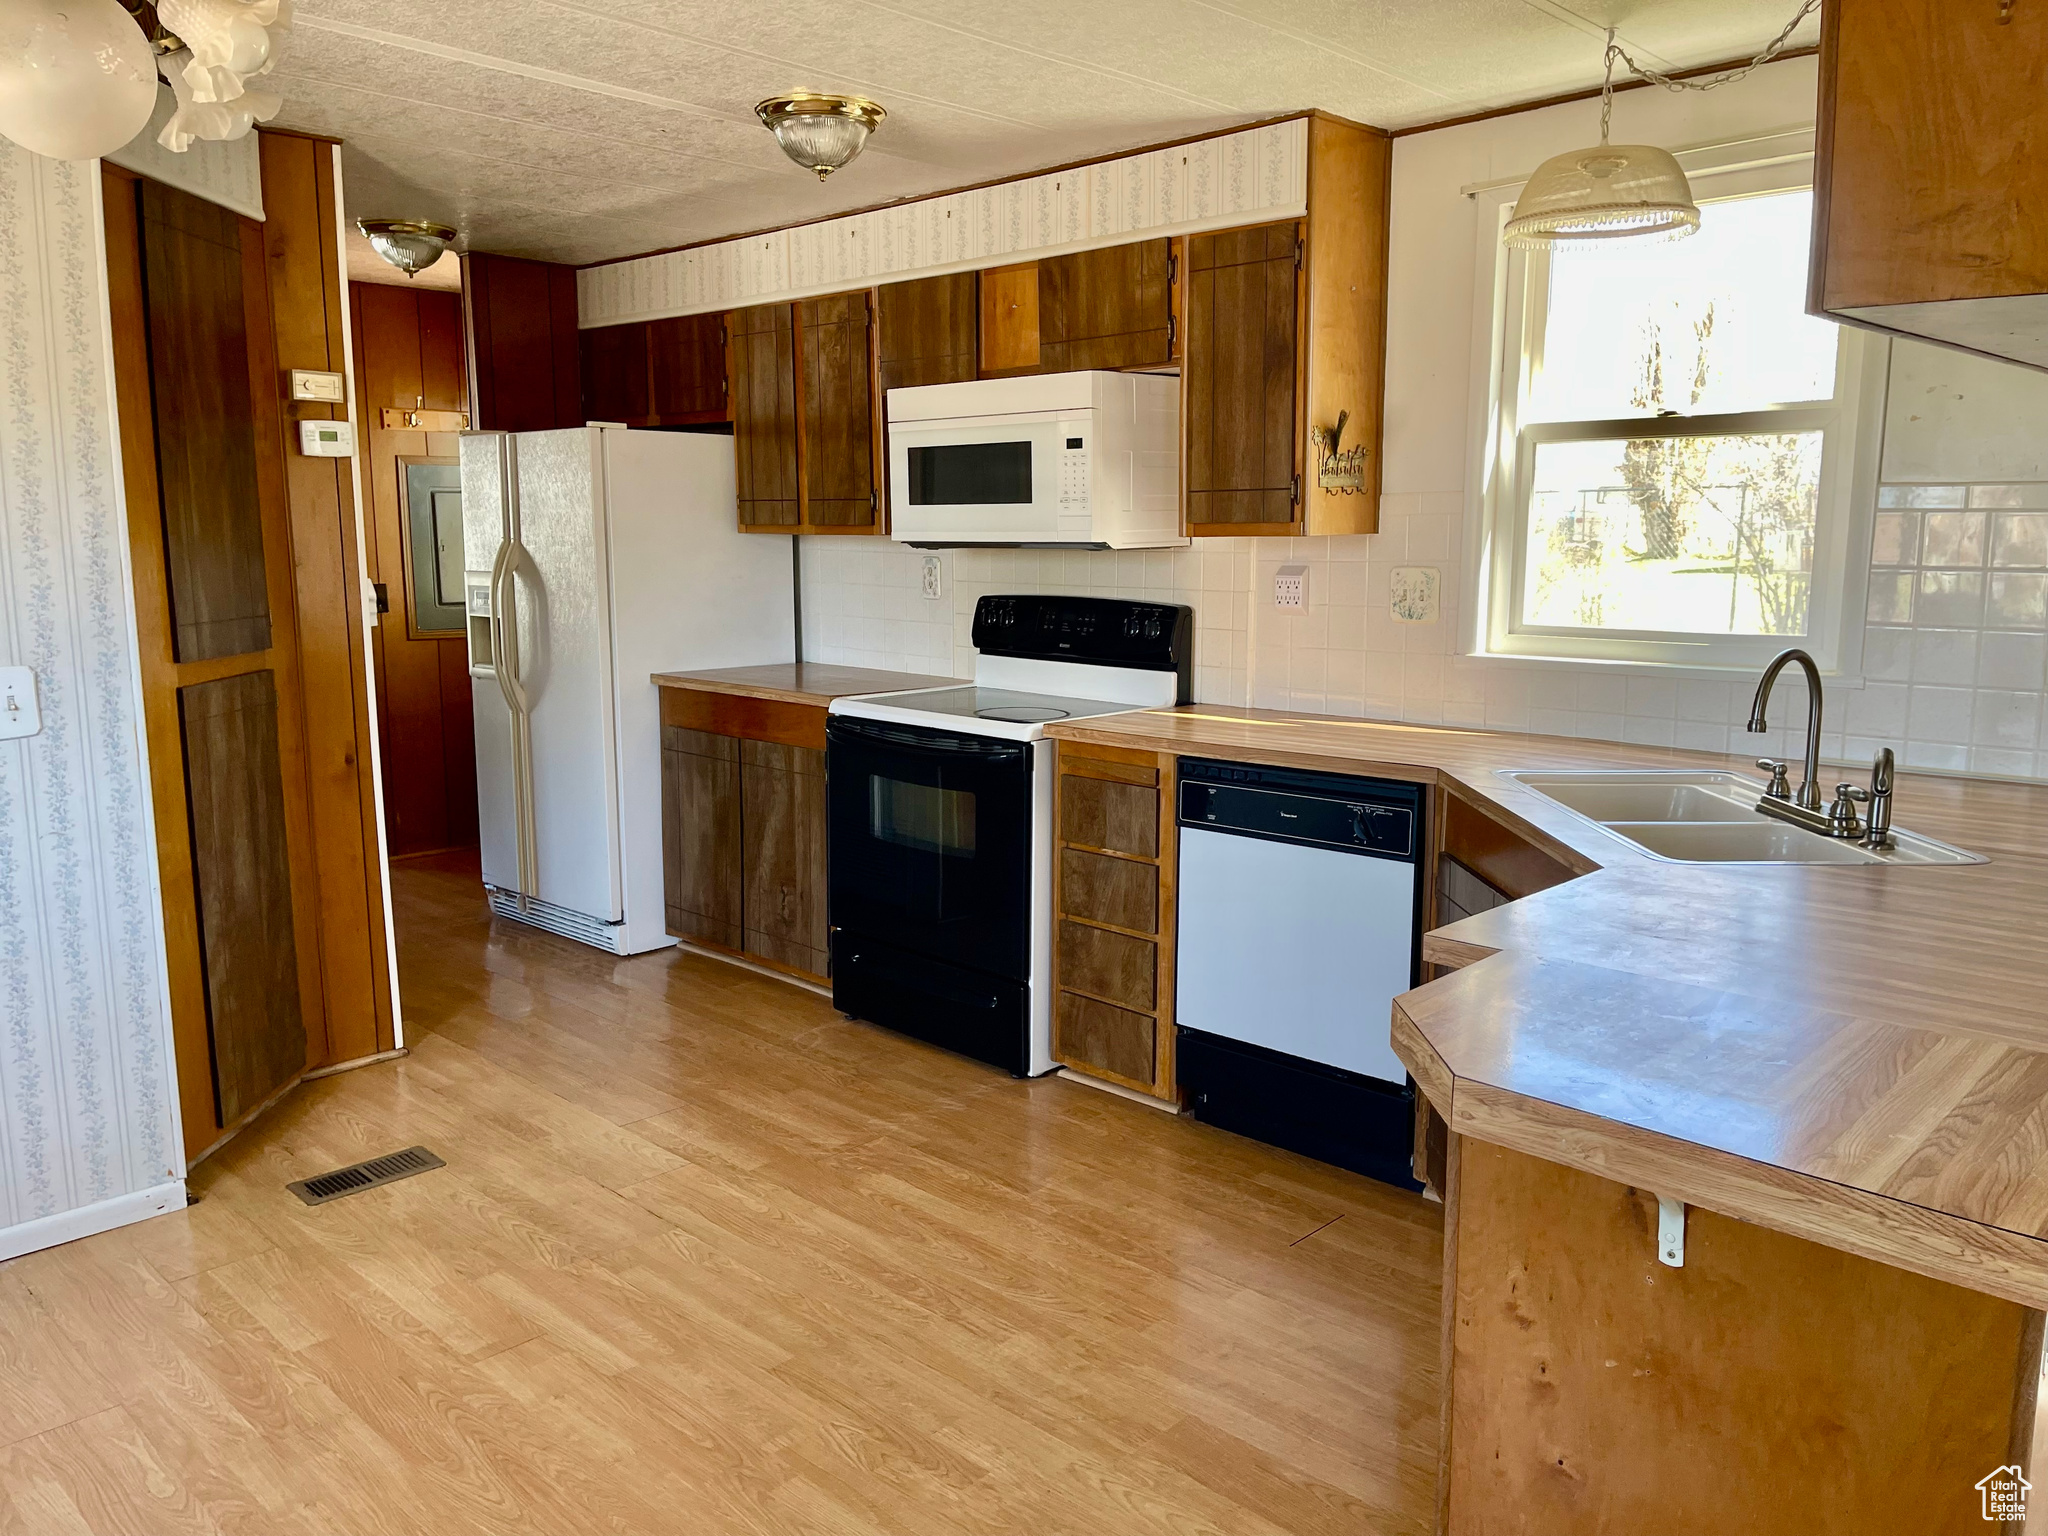 Kitchen featuring sink, white appliances, backsplash, decorative light fixtures, and light hardwood / wood-style flooring